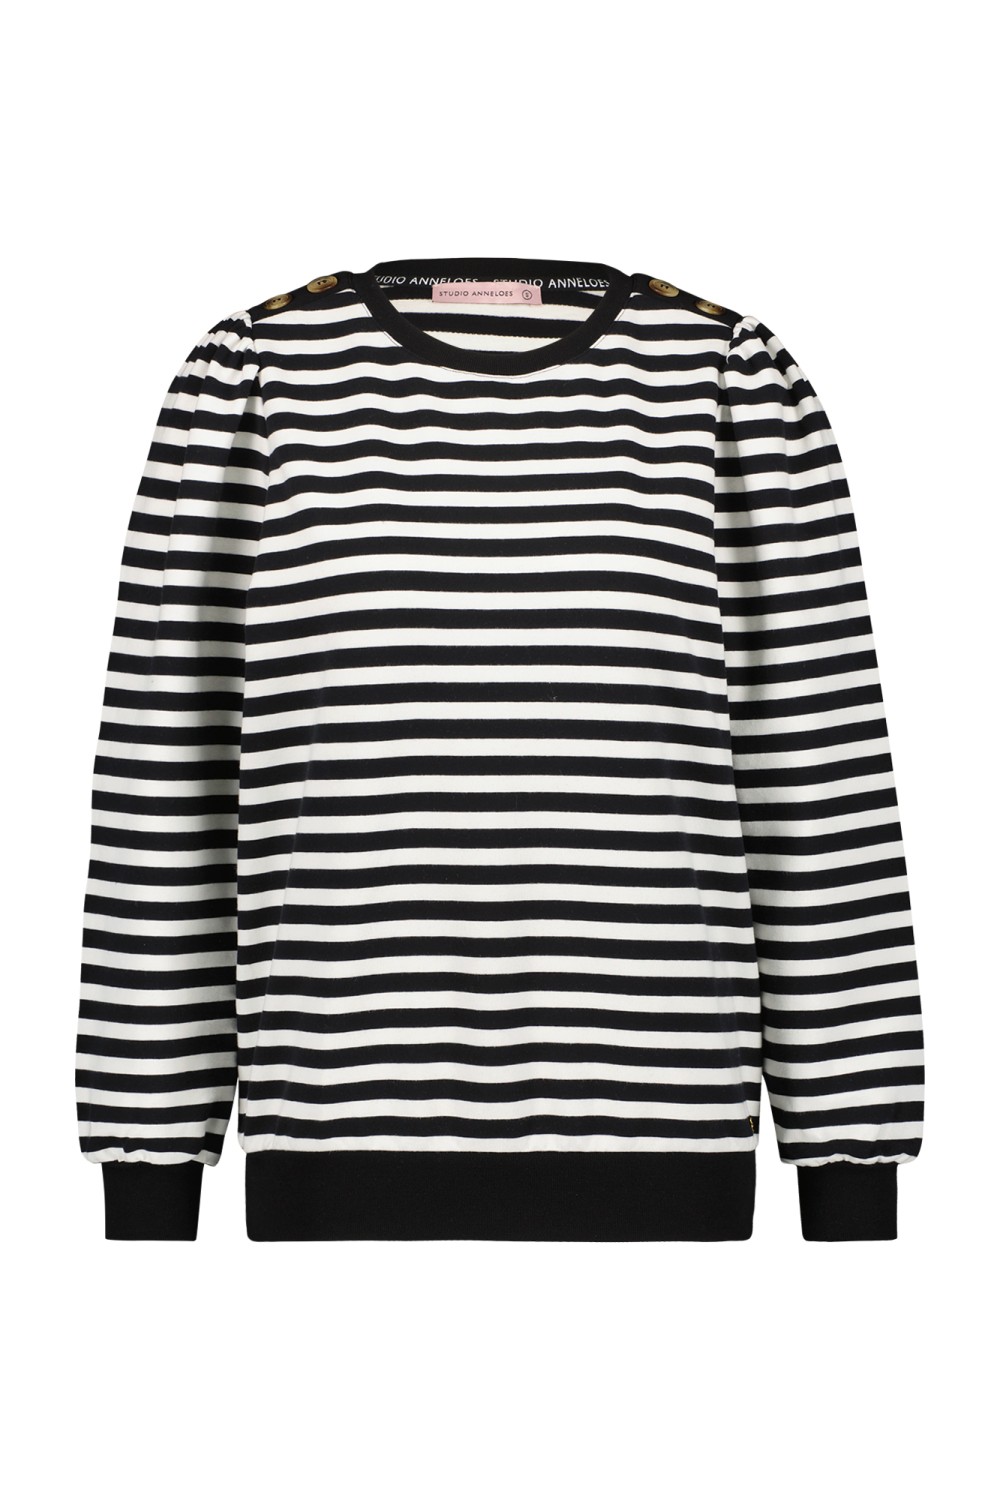 gaan beslissen Kritisch Wetenschap Studio Anneloes 06881 Maura stripe sweater Black/off white - Siezz